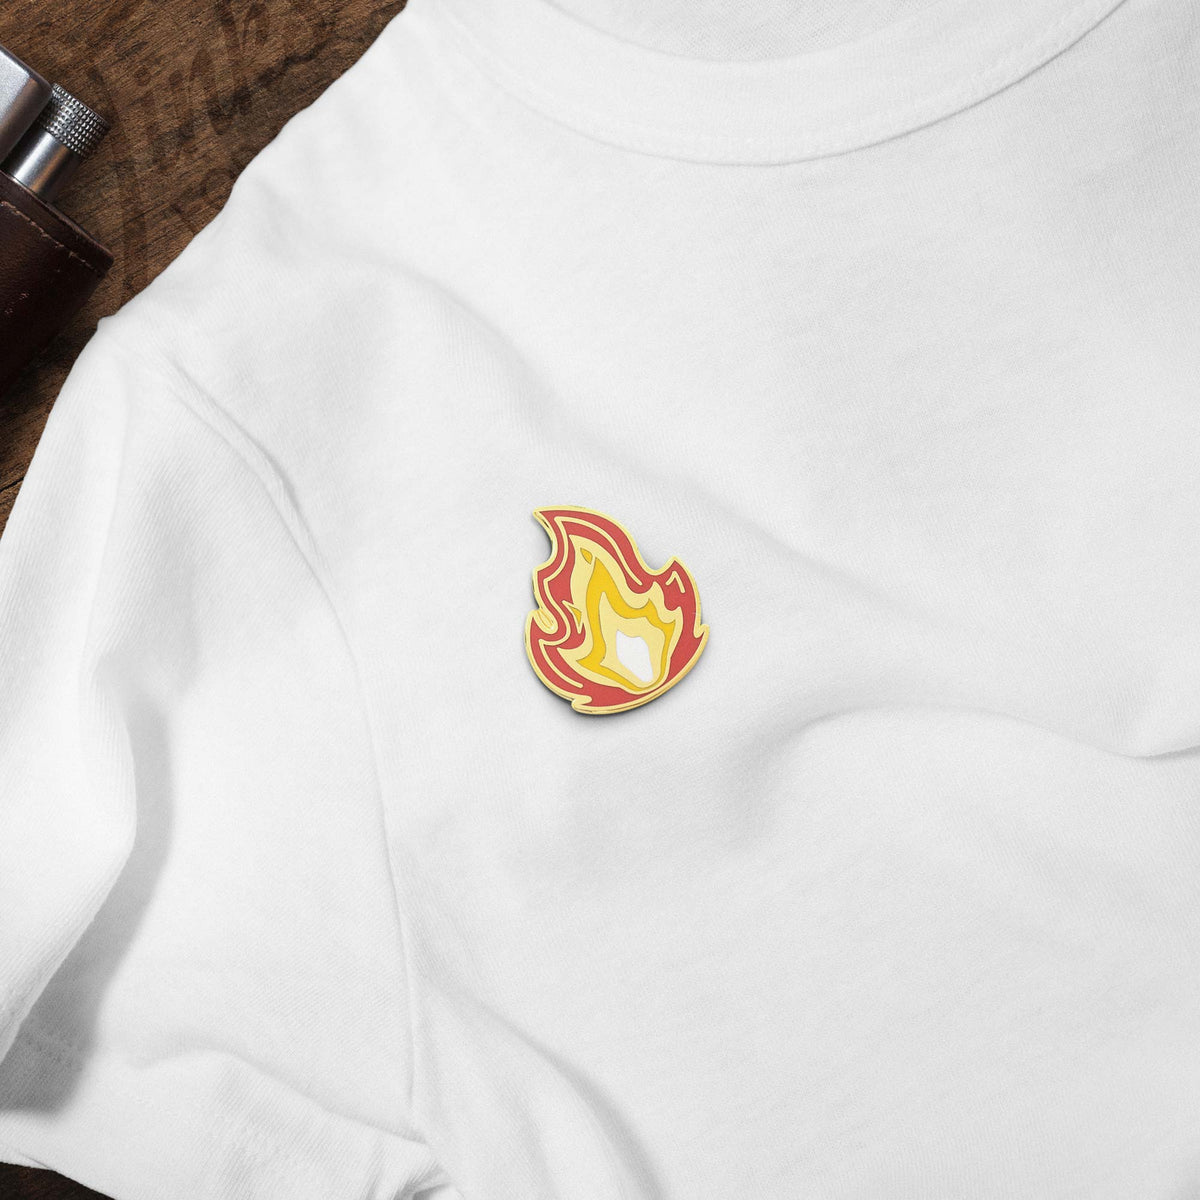 It's Fire hard enamel pin on white t-shirt